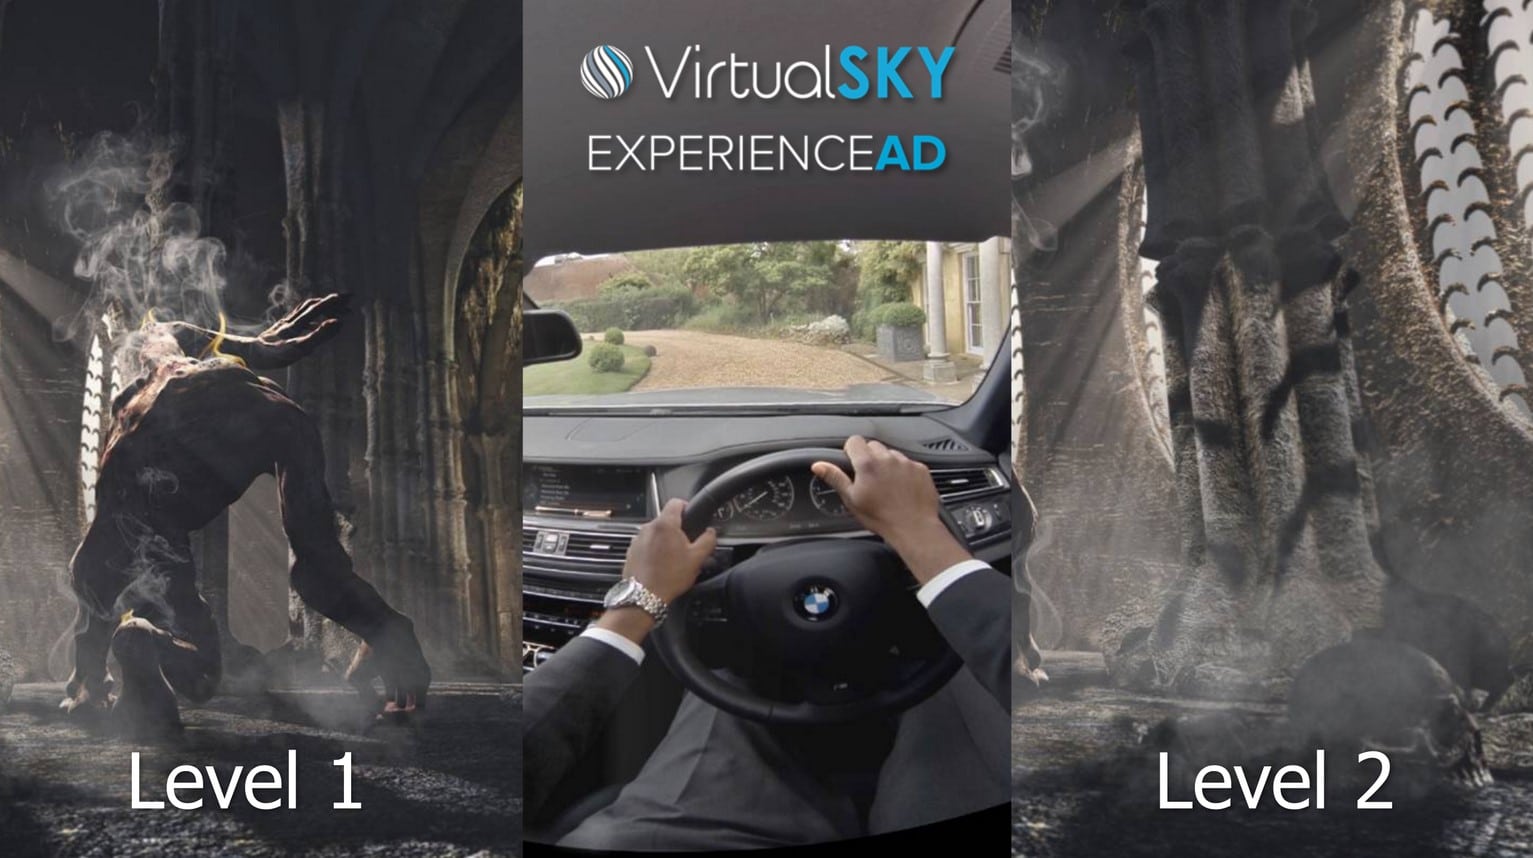 Virtual Reality Advertising